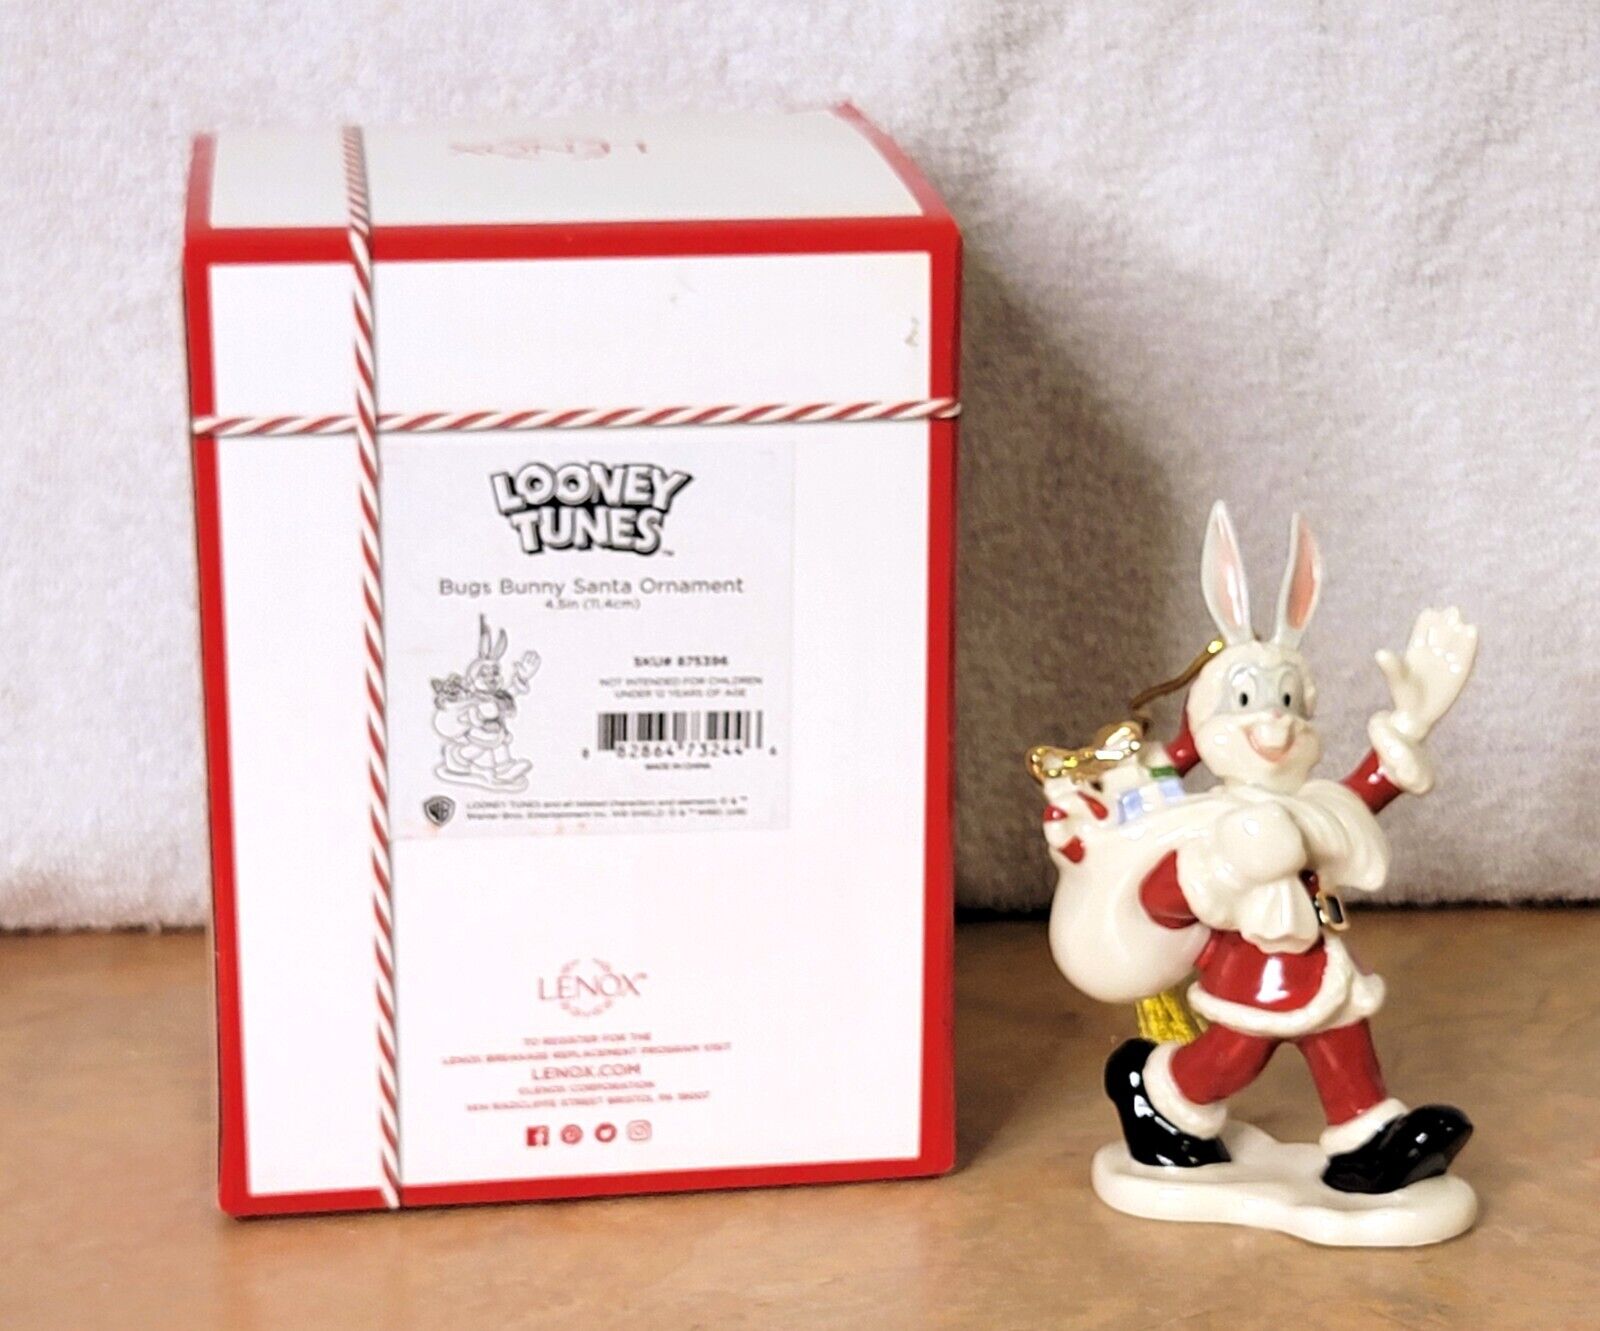 Lenox Bugs Bunny Santa Ornament Looney Tunes NEW IN BOX